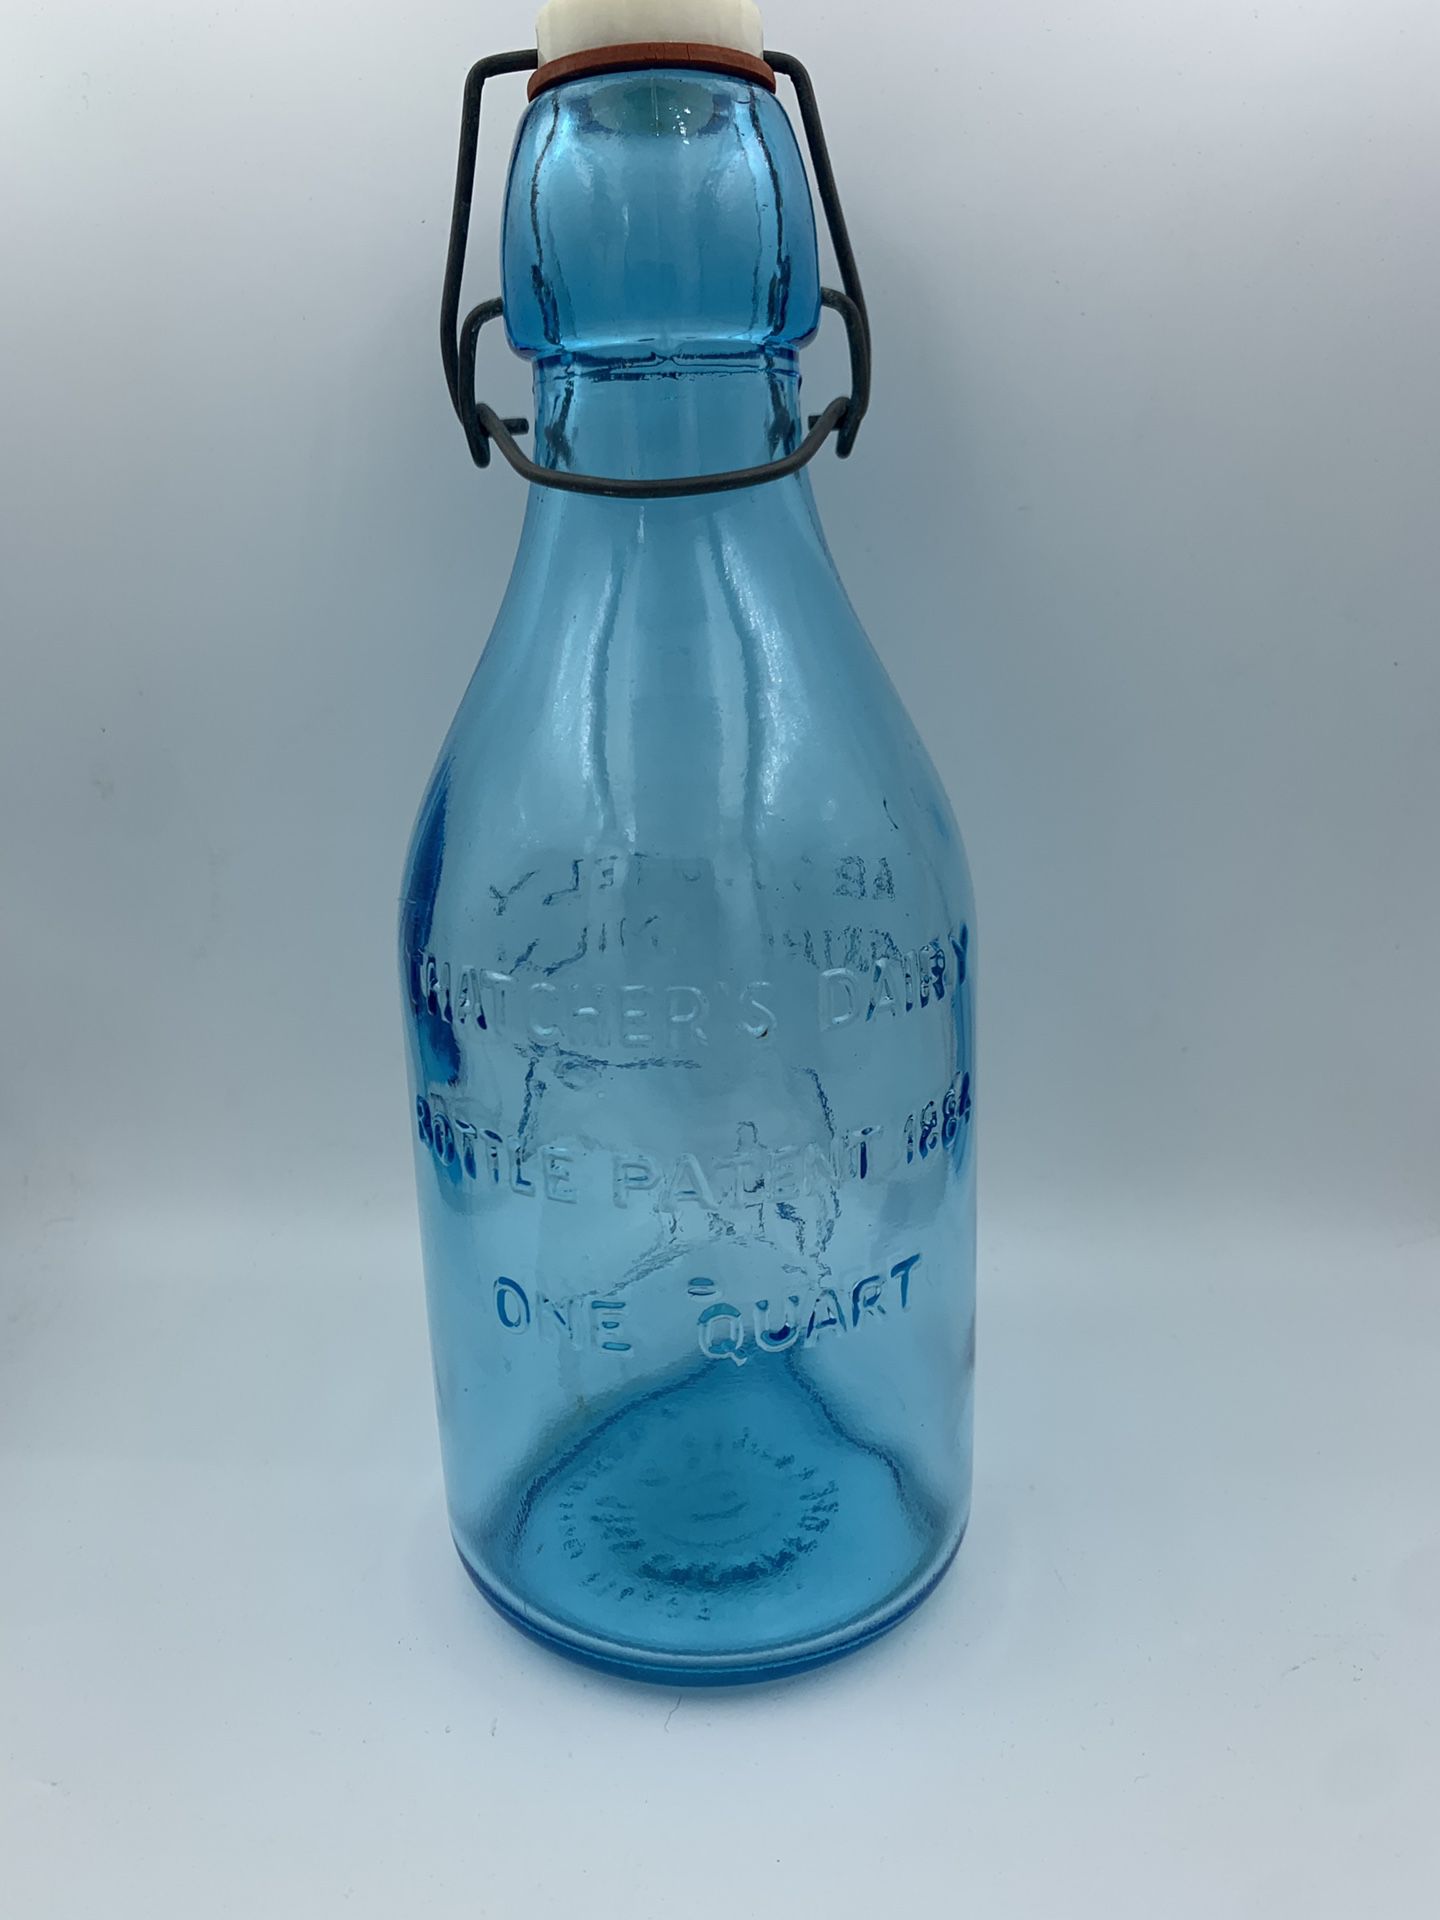 Vintage Embossed Milk Bottle in Mint Condition